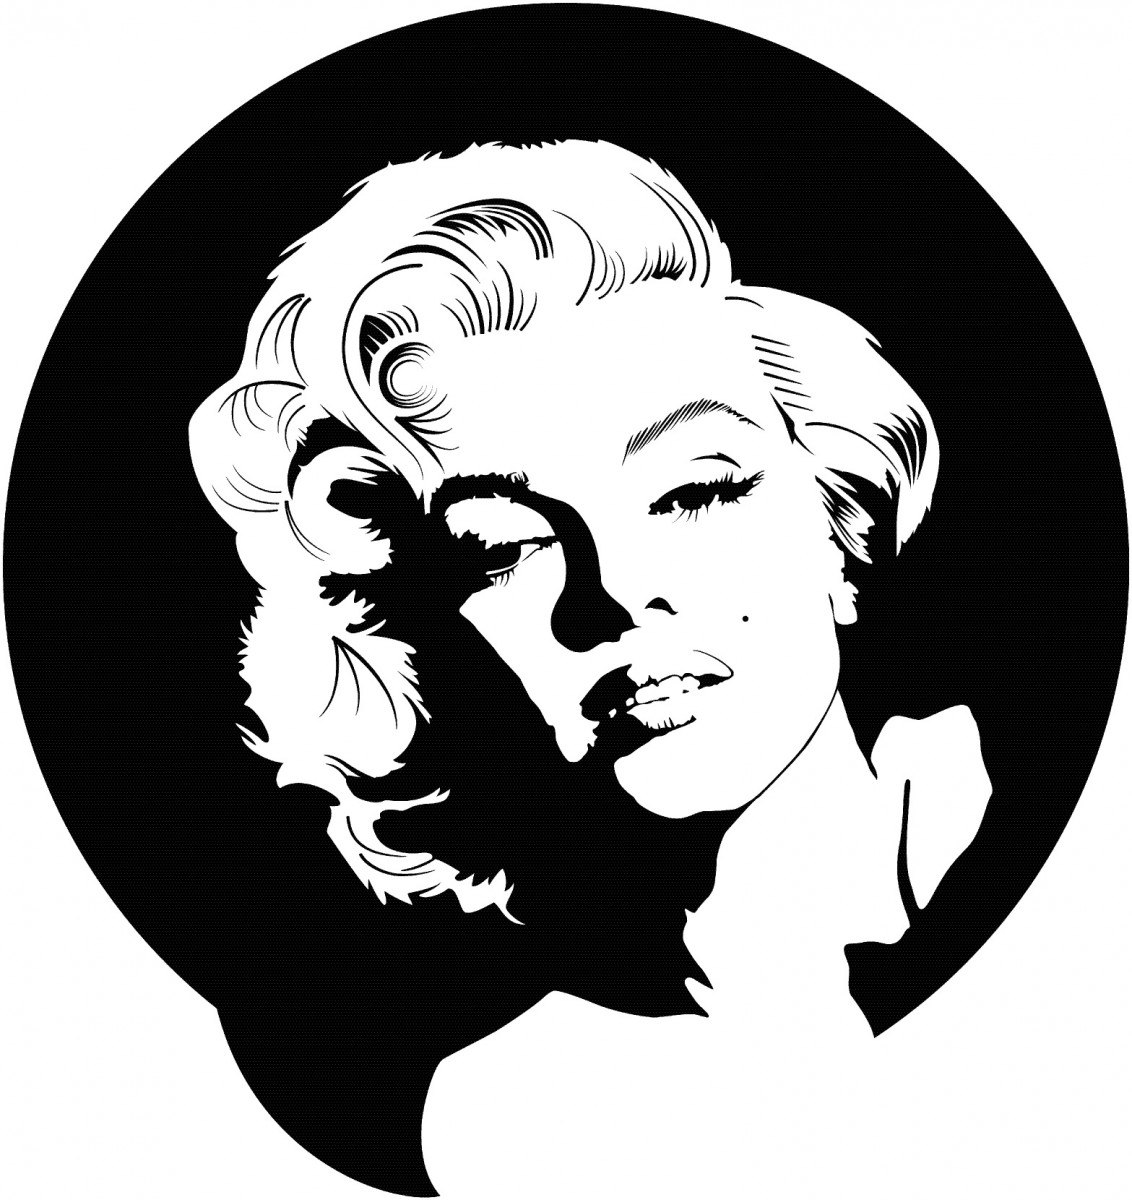 Marilyn Monroe 2210 Free CDR Vectors Art